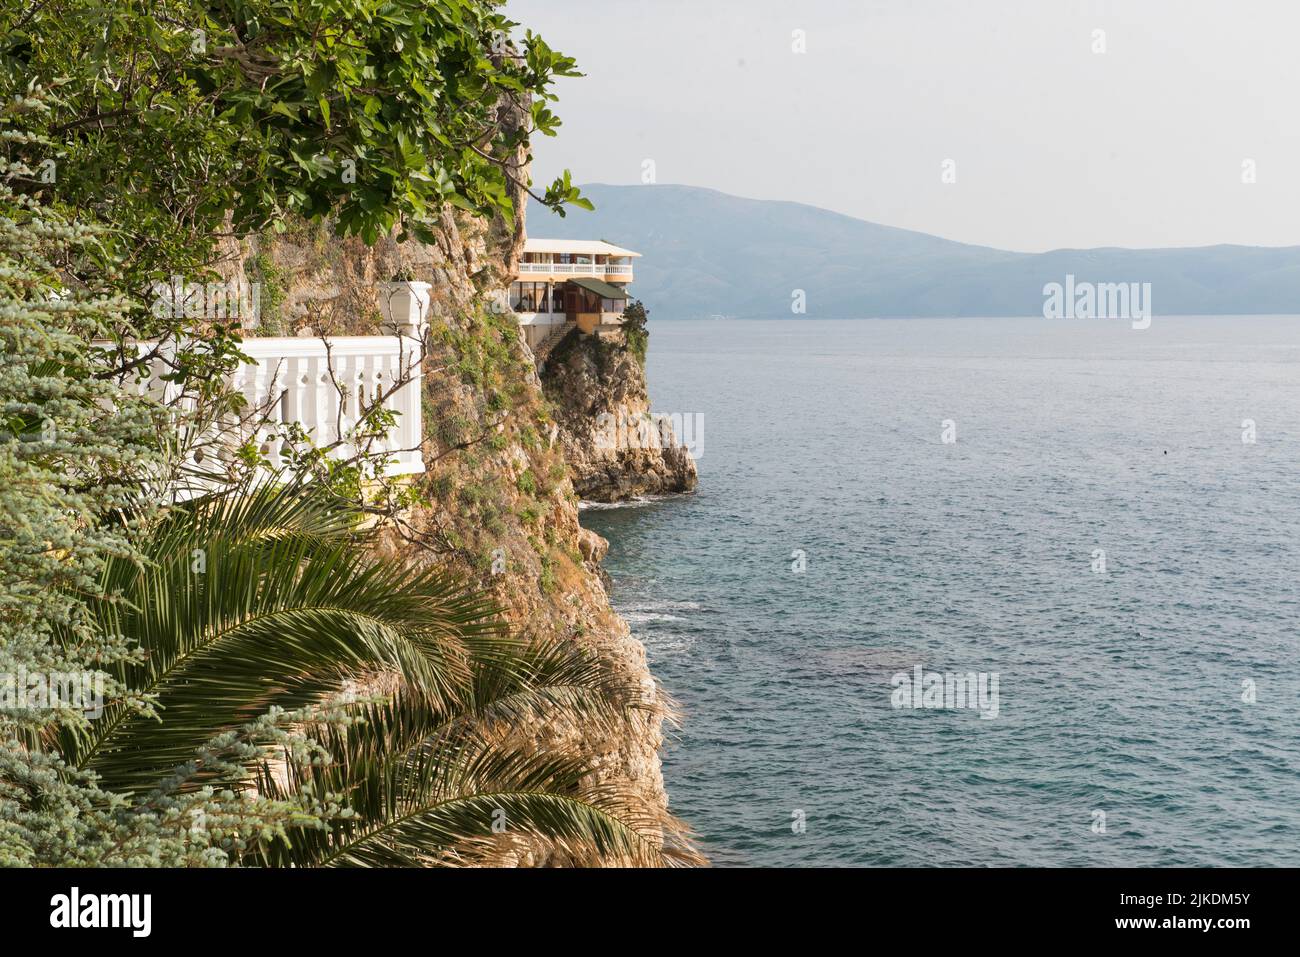 Liro Hotel backed by the cliff, Vlore, seaside resort on the Adriatic Sea, Albania, Southeastern Europe. Stock Photo